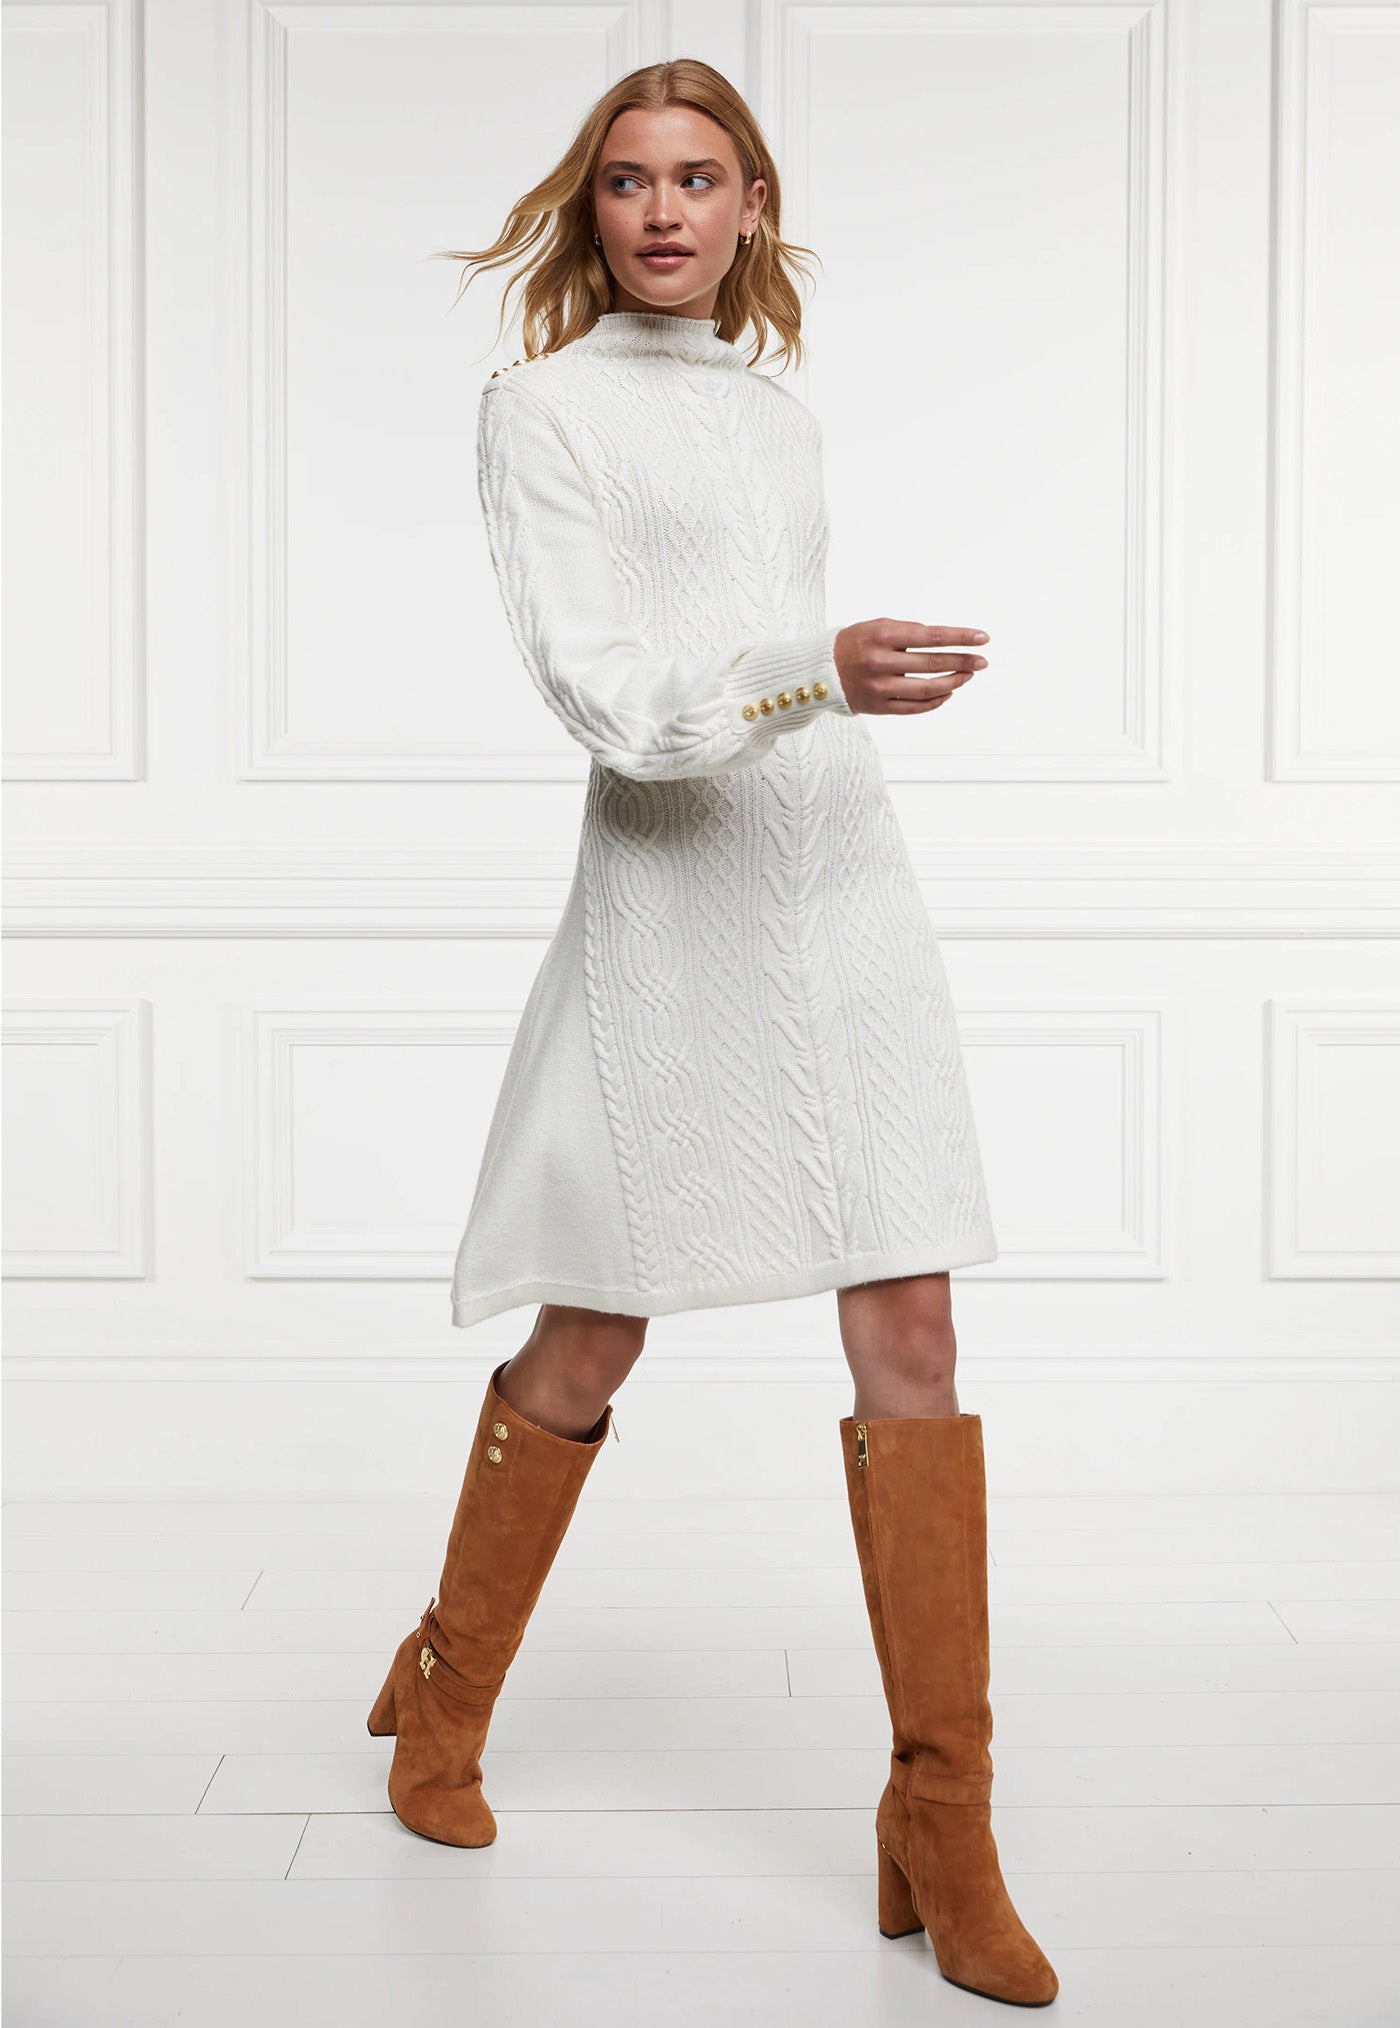 Rachel Mini Dress - Oyster sold by Angel Divine